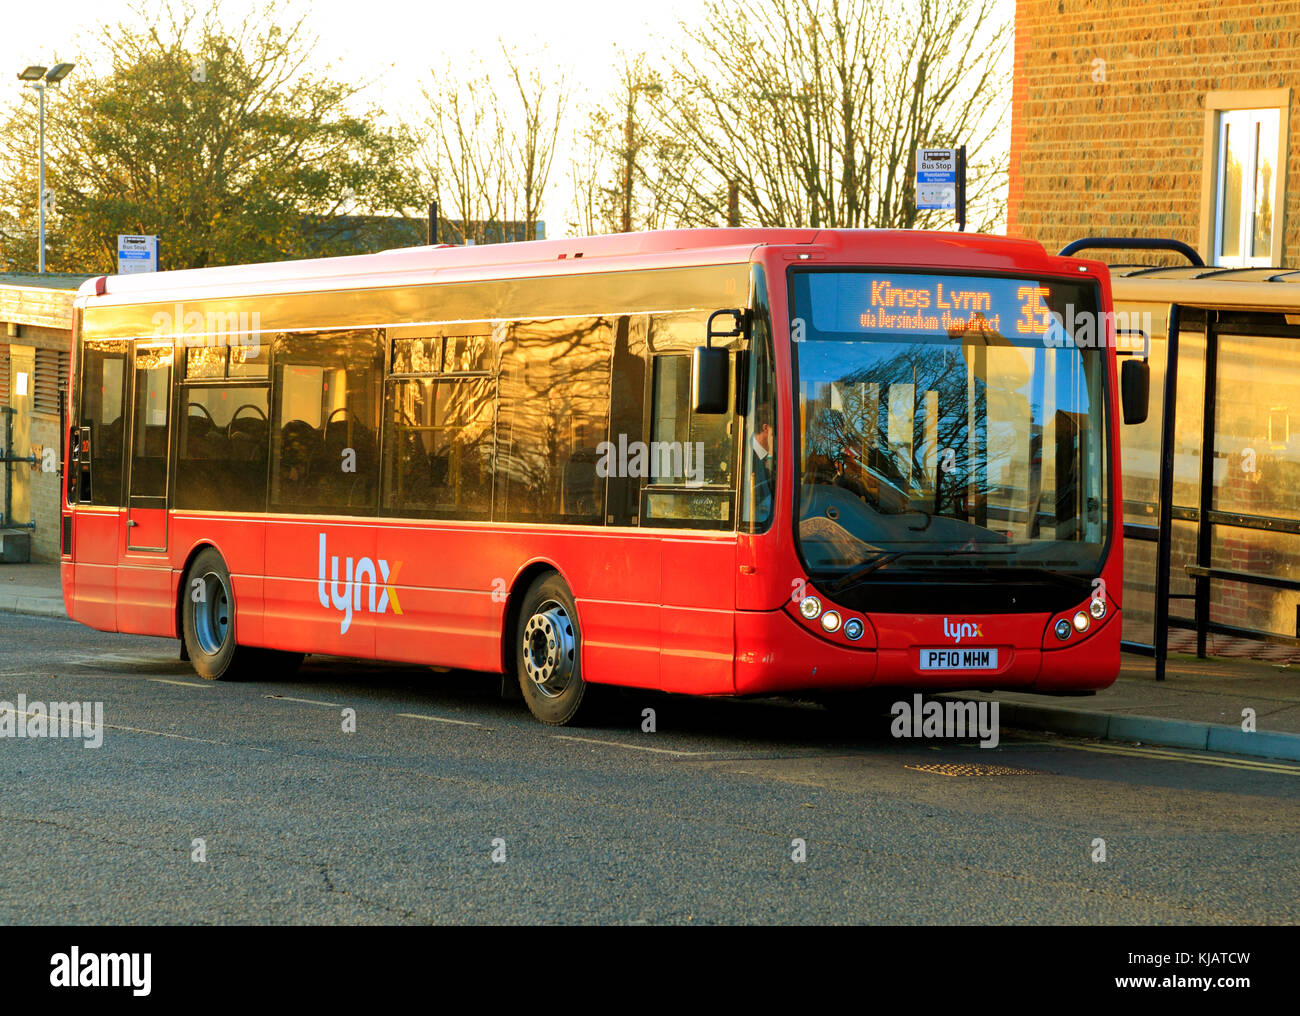 Lynx bus, public transport, Kings Lynn, Dersingham, Hunstanton, Norfolk, England, UK Stock Photo